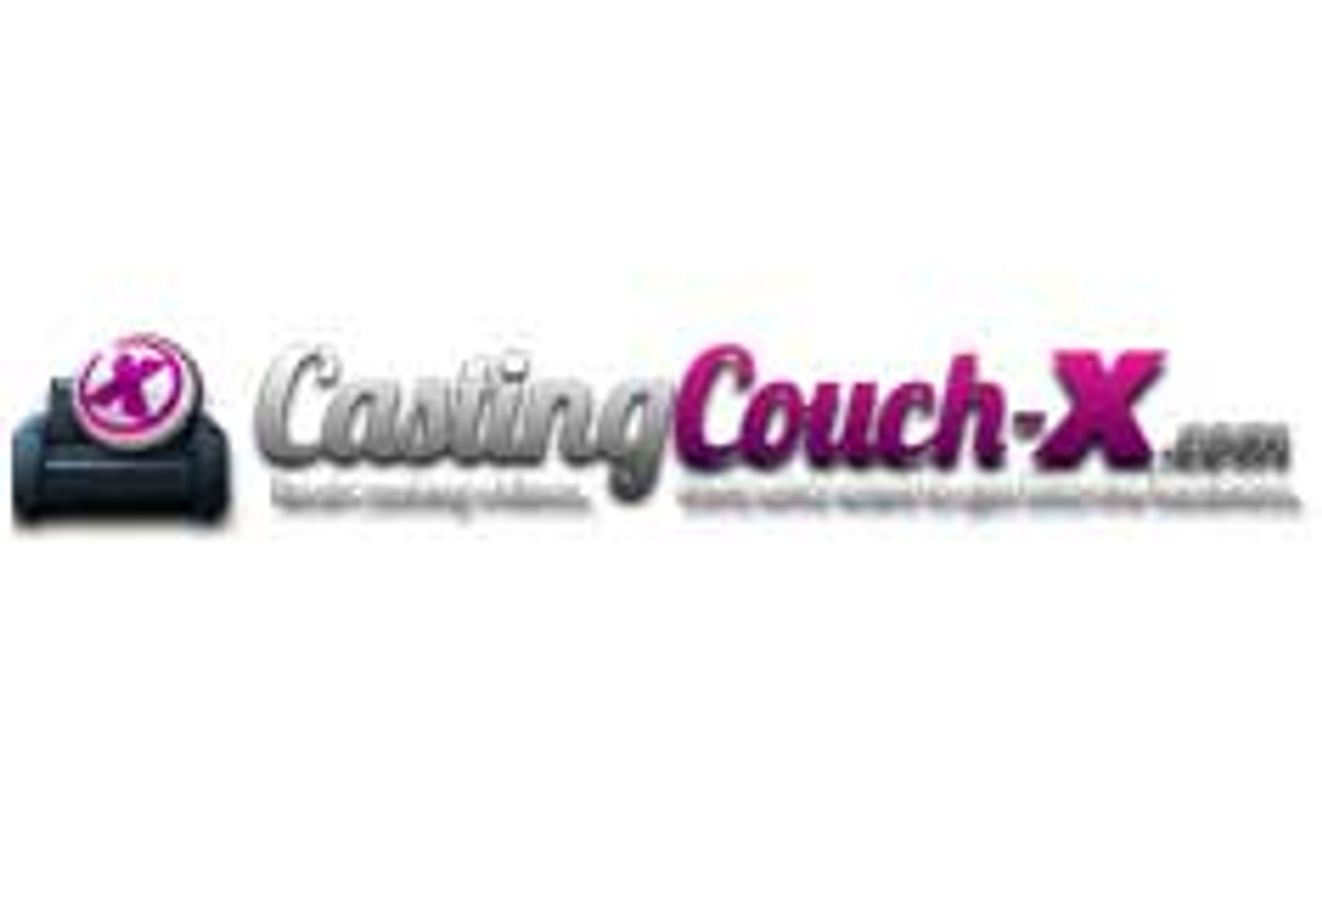 CastingCouch-X.com